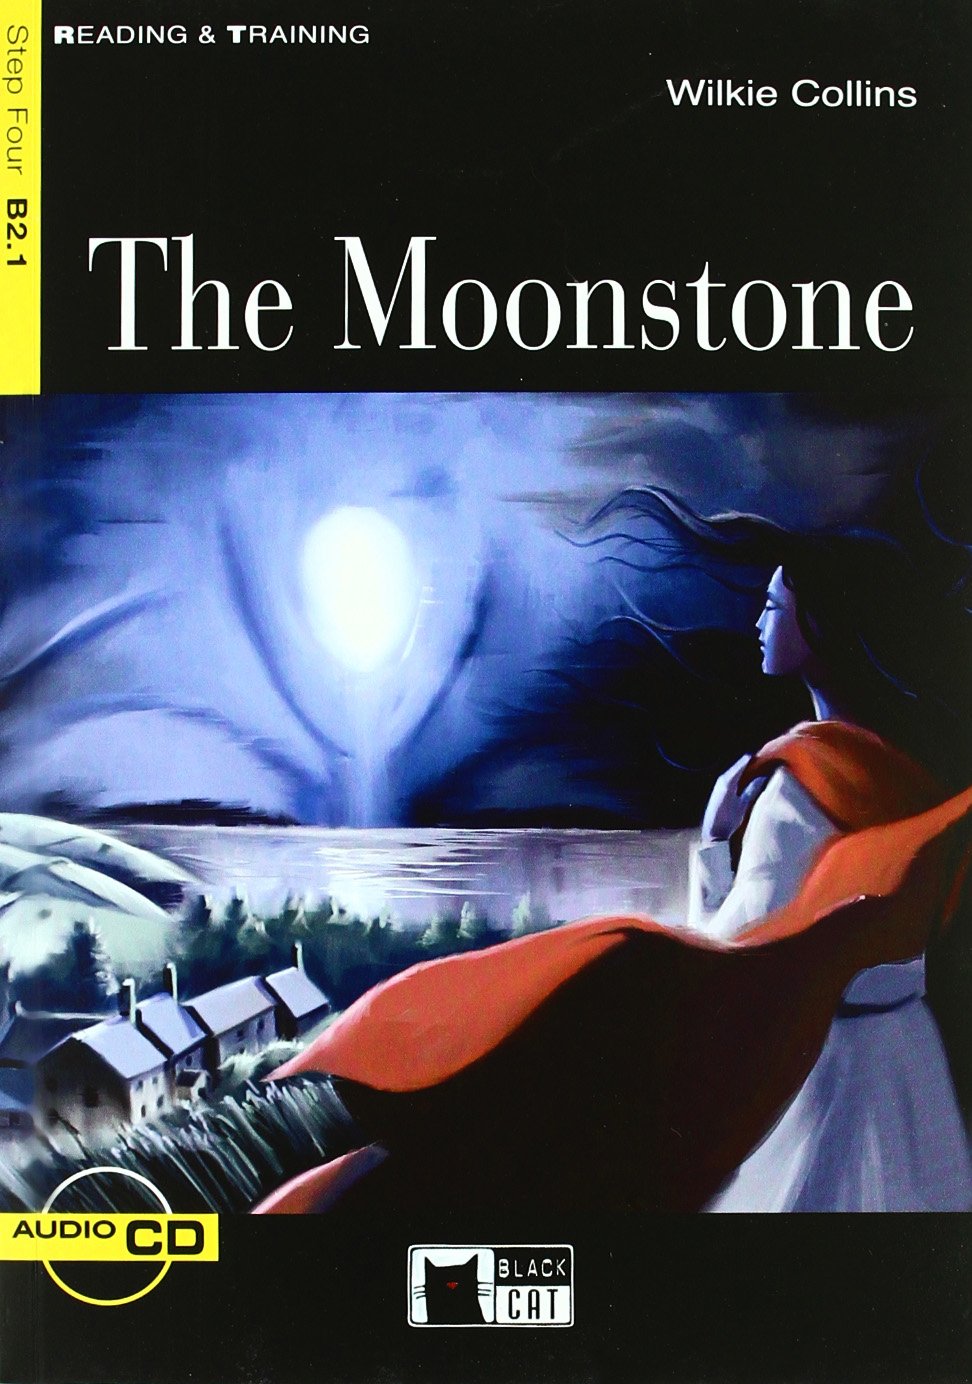  The Moonstone